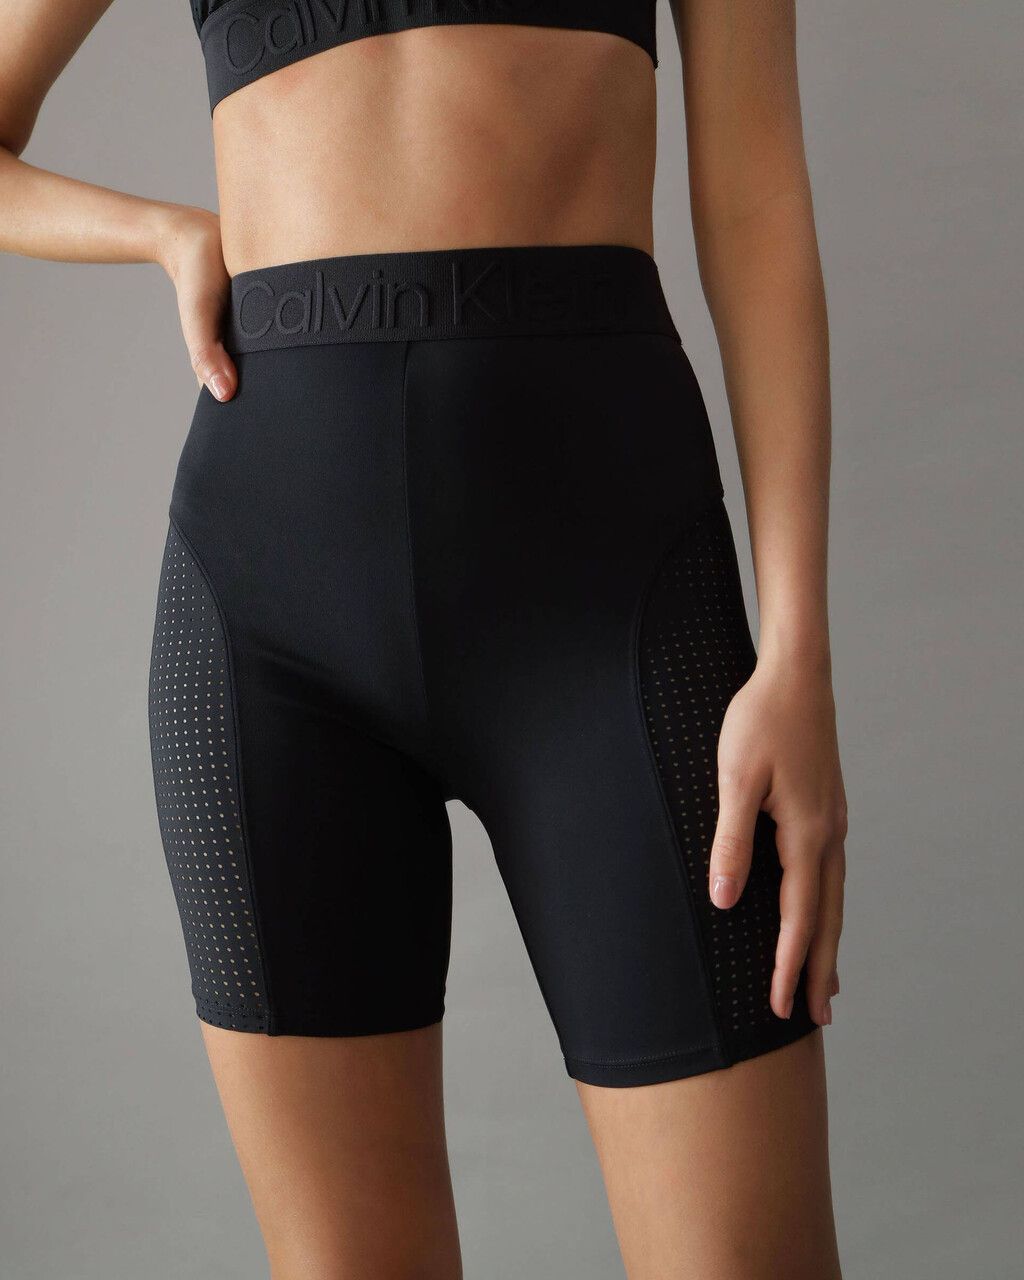 Calvin Klein - Quần ngắn ống ôm thể thao nữ Tight Gym Shorts